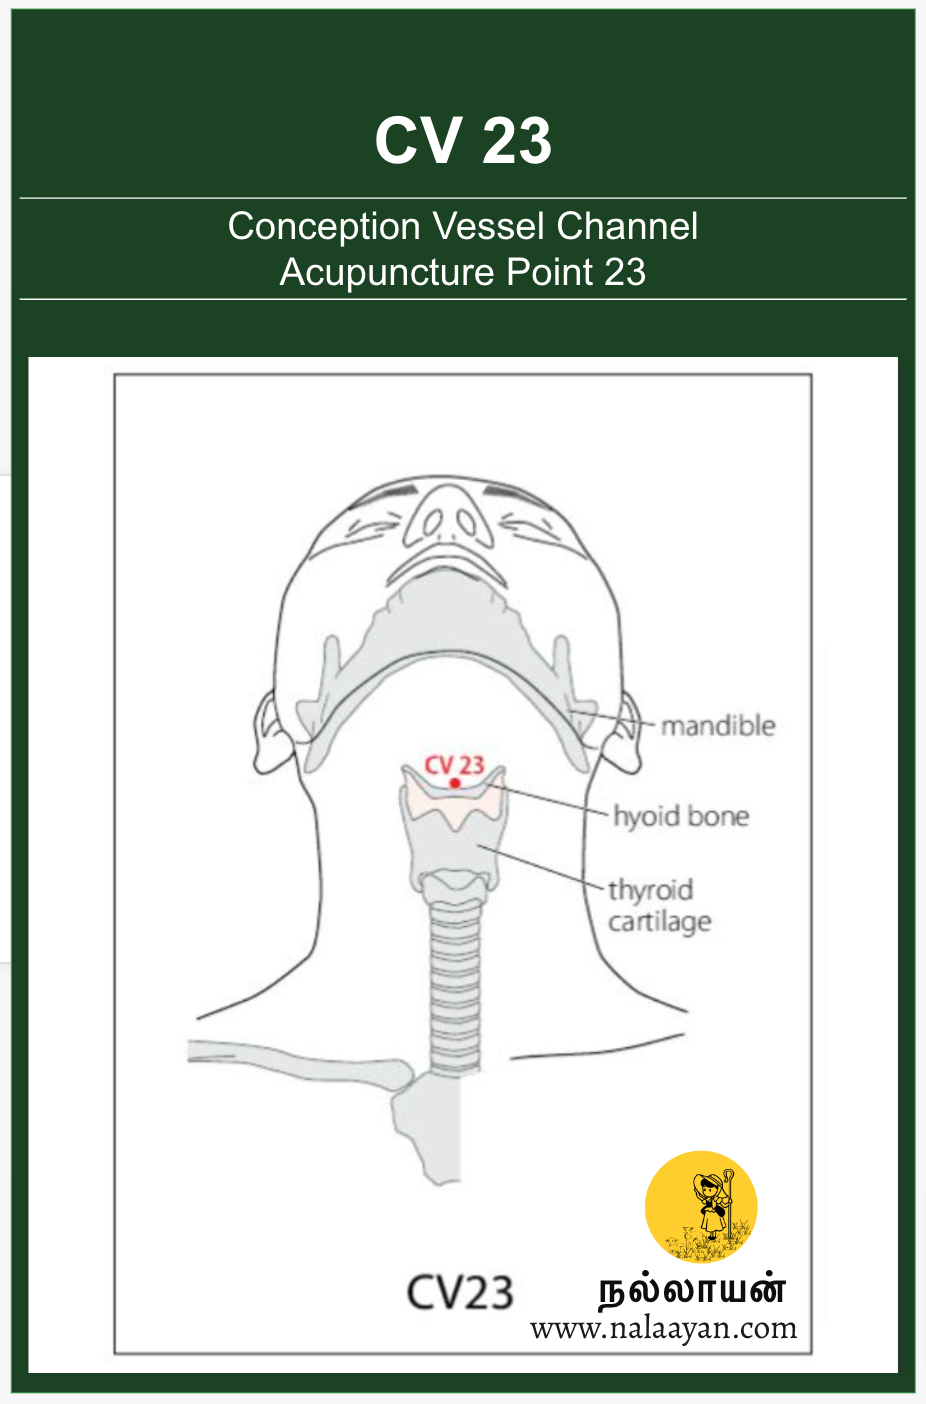 CV 23 Acupuncture Point - The Good Shepherd - Medium